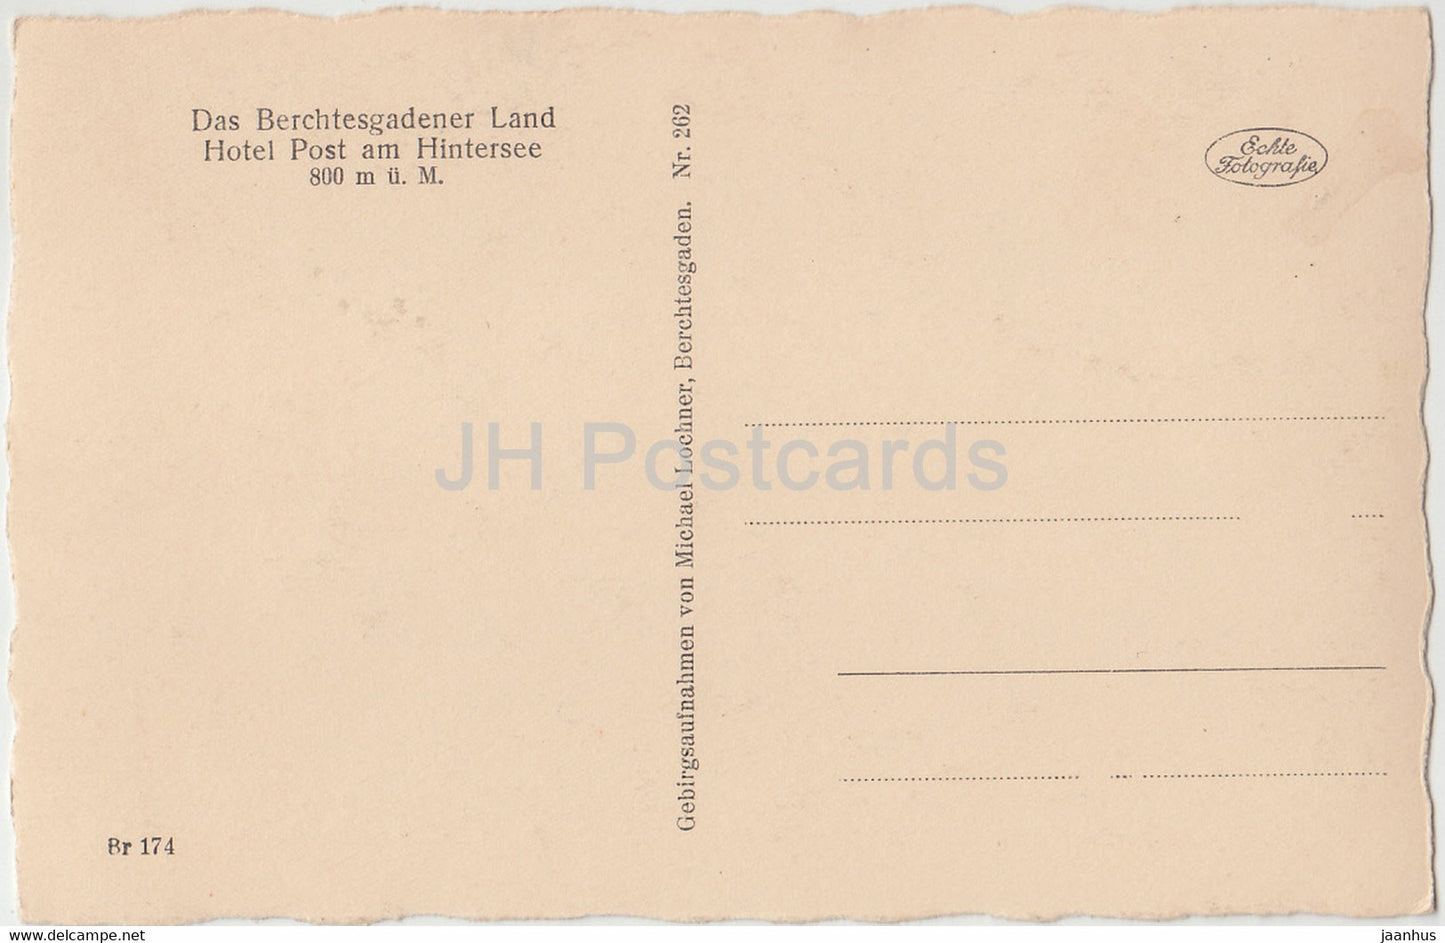 Am Hintersee - Das Berchtesgaden Land - Hotel Post am Hintersee 800 m - 262 - old postcard - Germany - unused